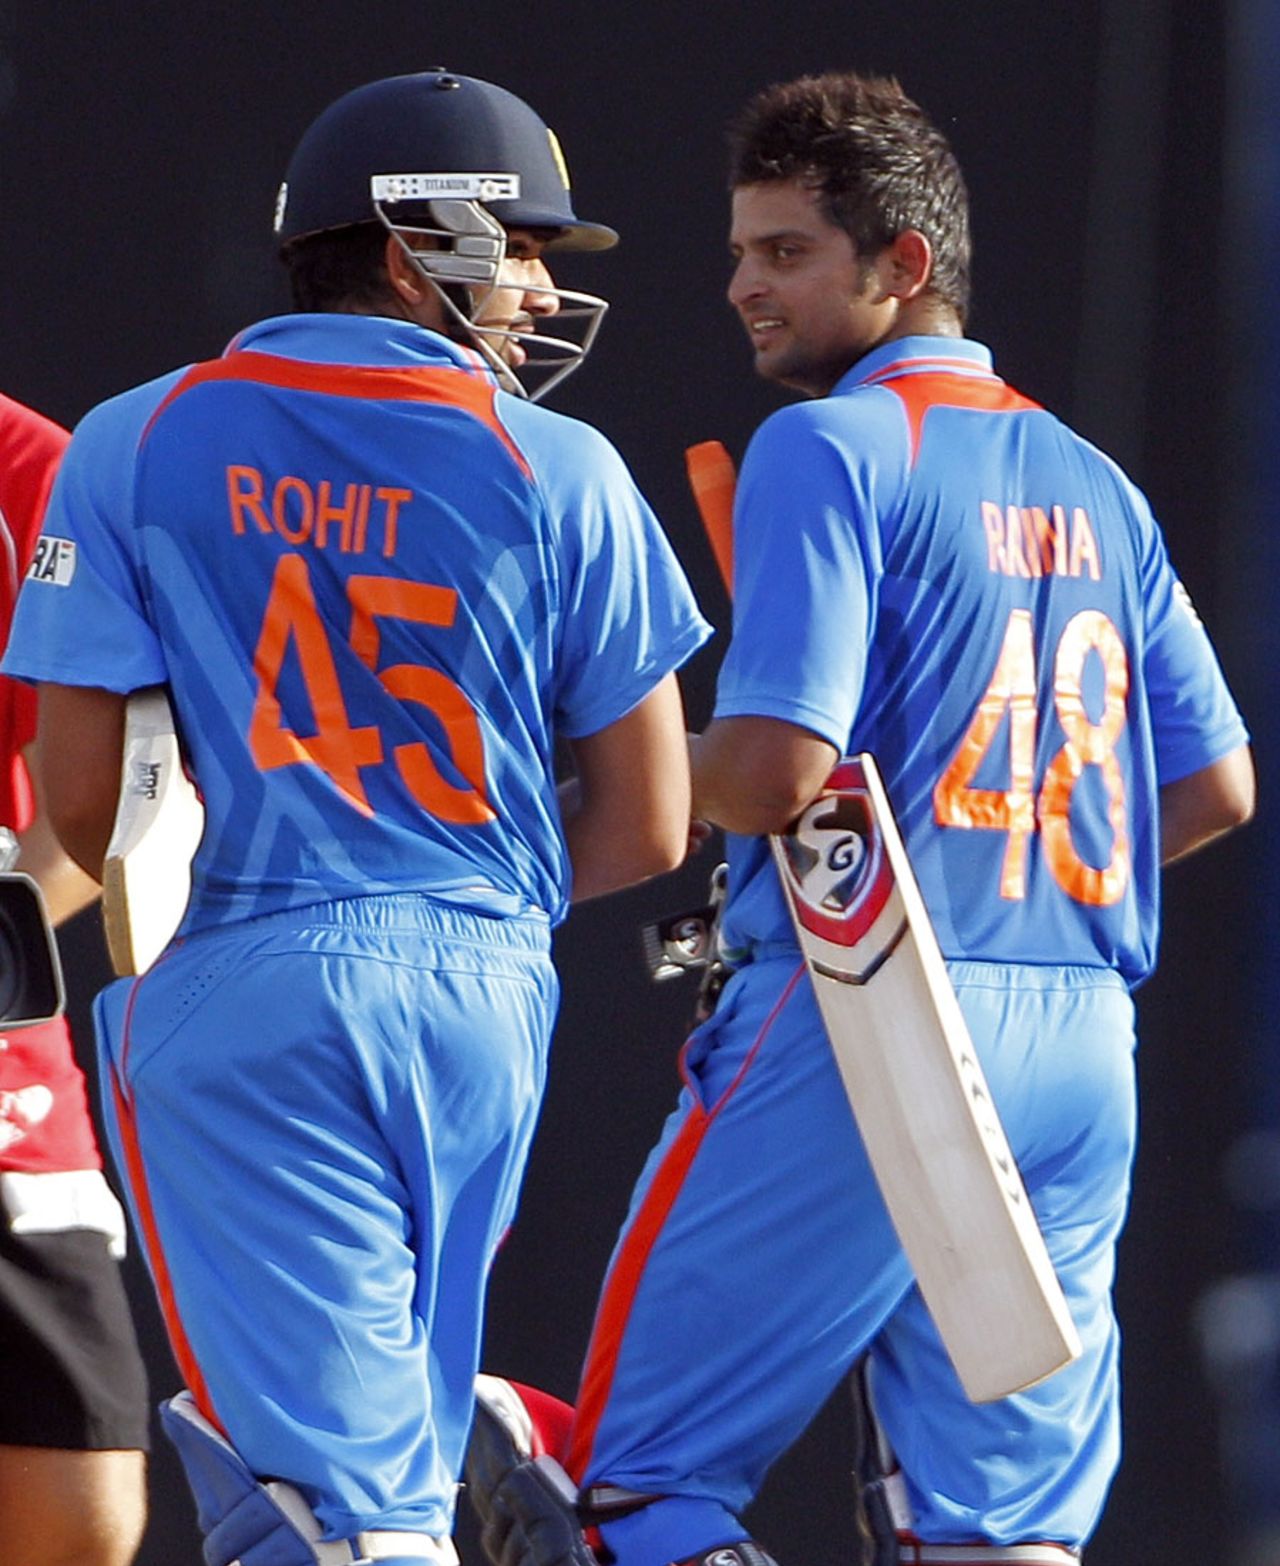 Rohit Sharma and Suresh Raina head to the pavilion, West Indies v India, 2nd ODI, Trinidad, June 8, 2011